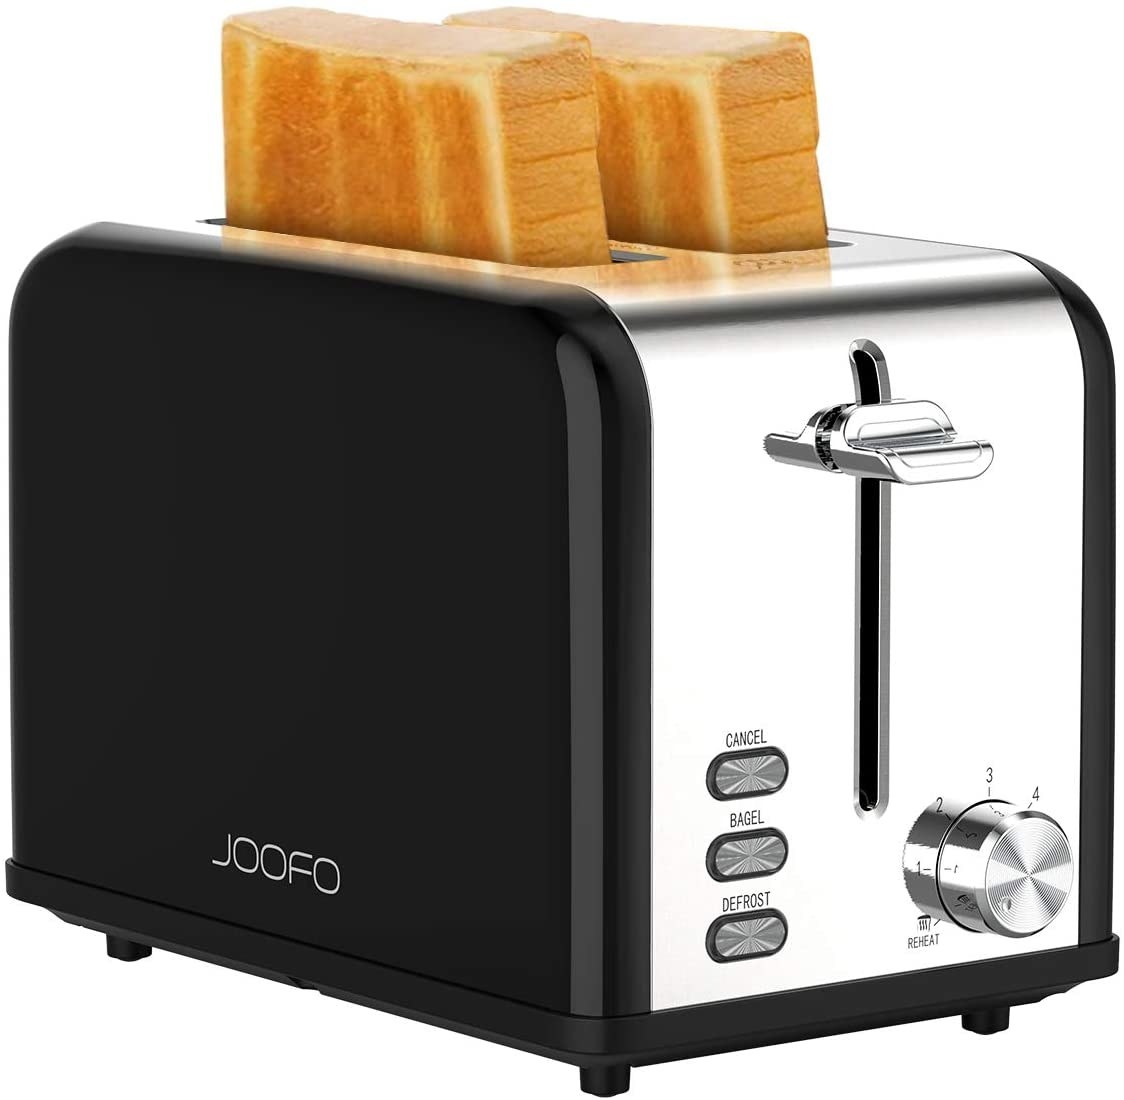 Stainless Steel Toaster